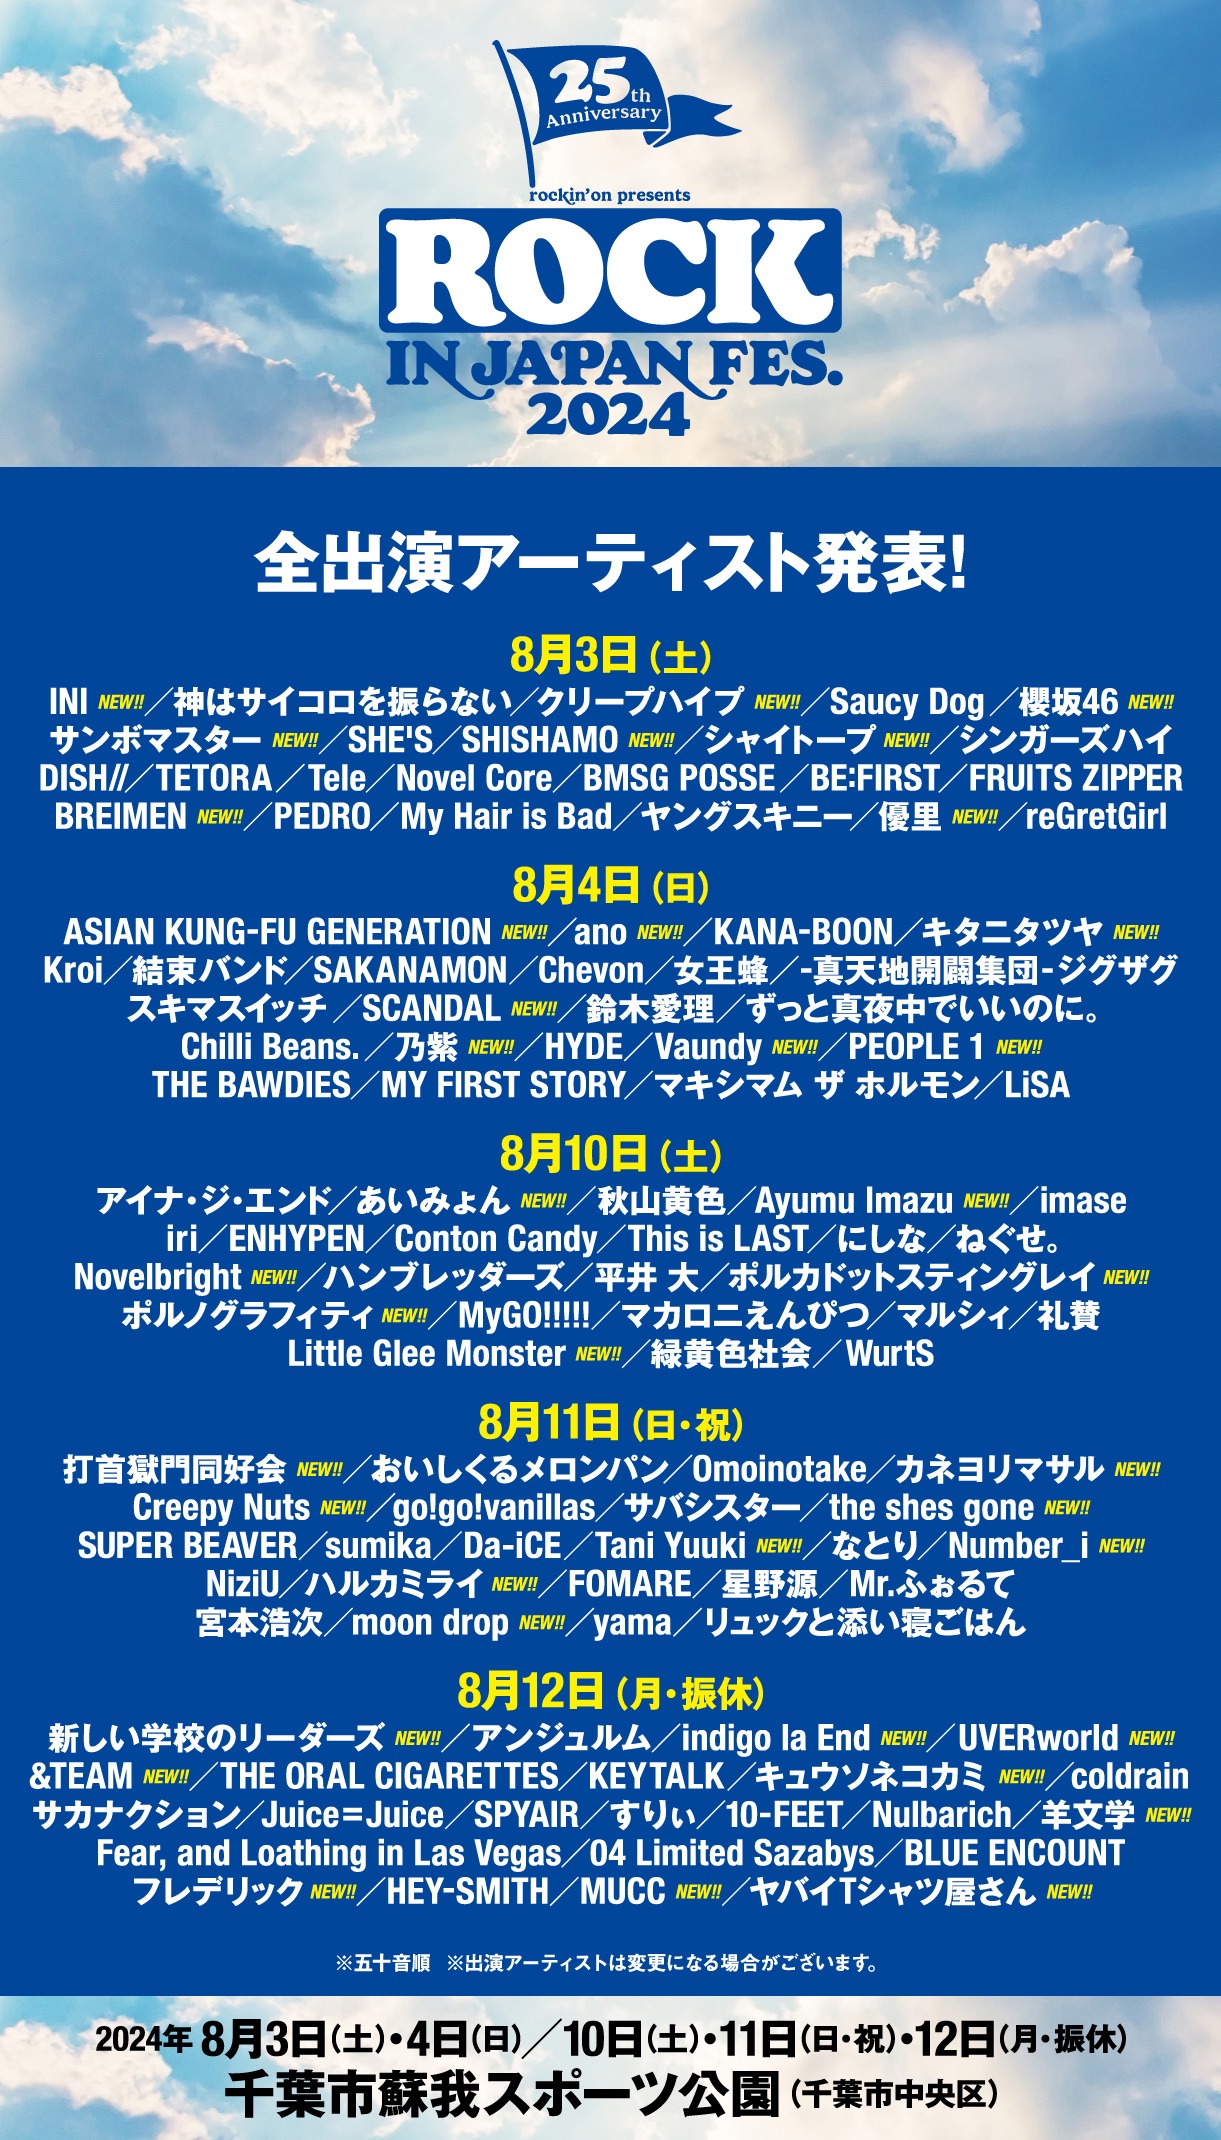 「ROCK IN JAPAN FESTIVAL 2024」にAyumu Imazuの出演が決定!